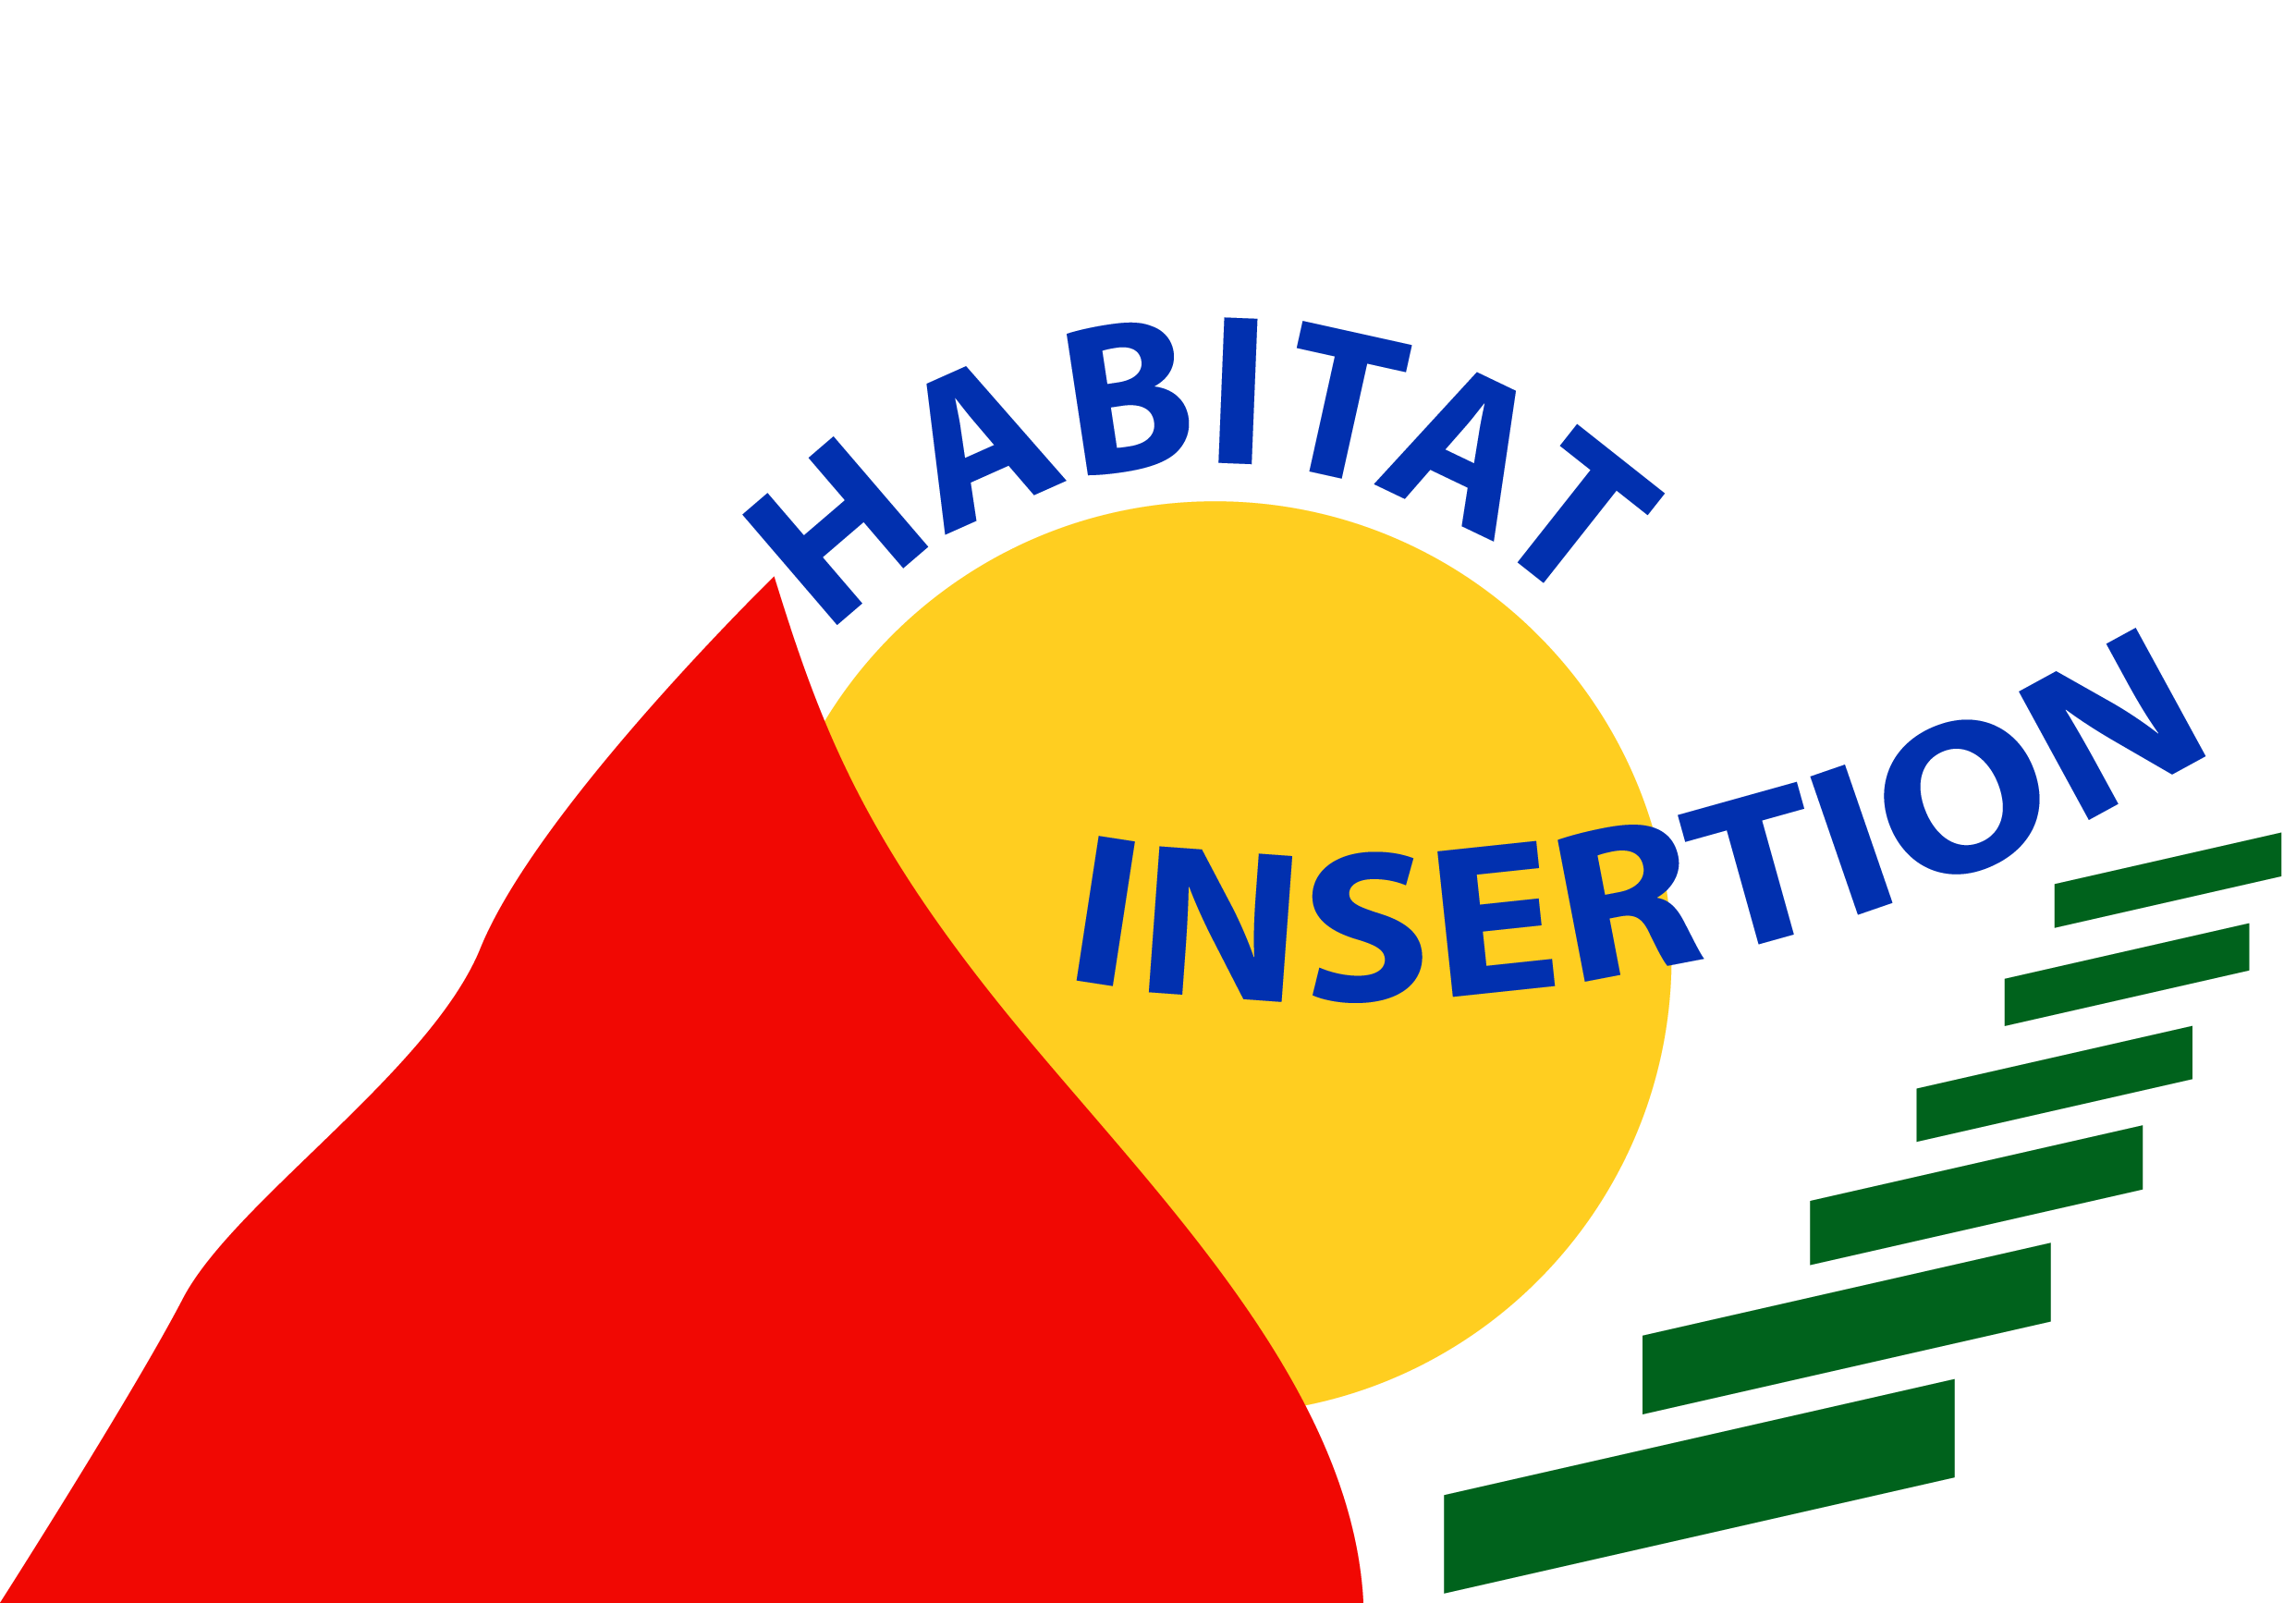 Habitat insertion